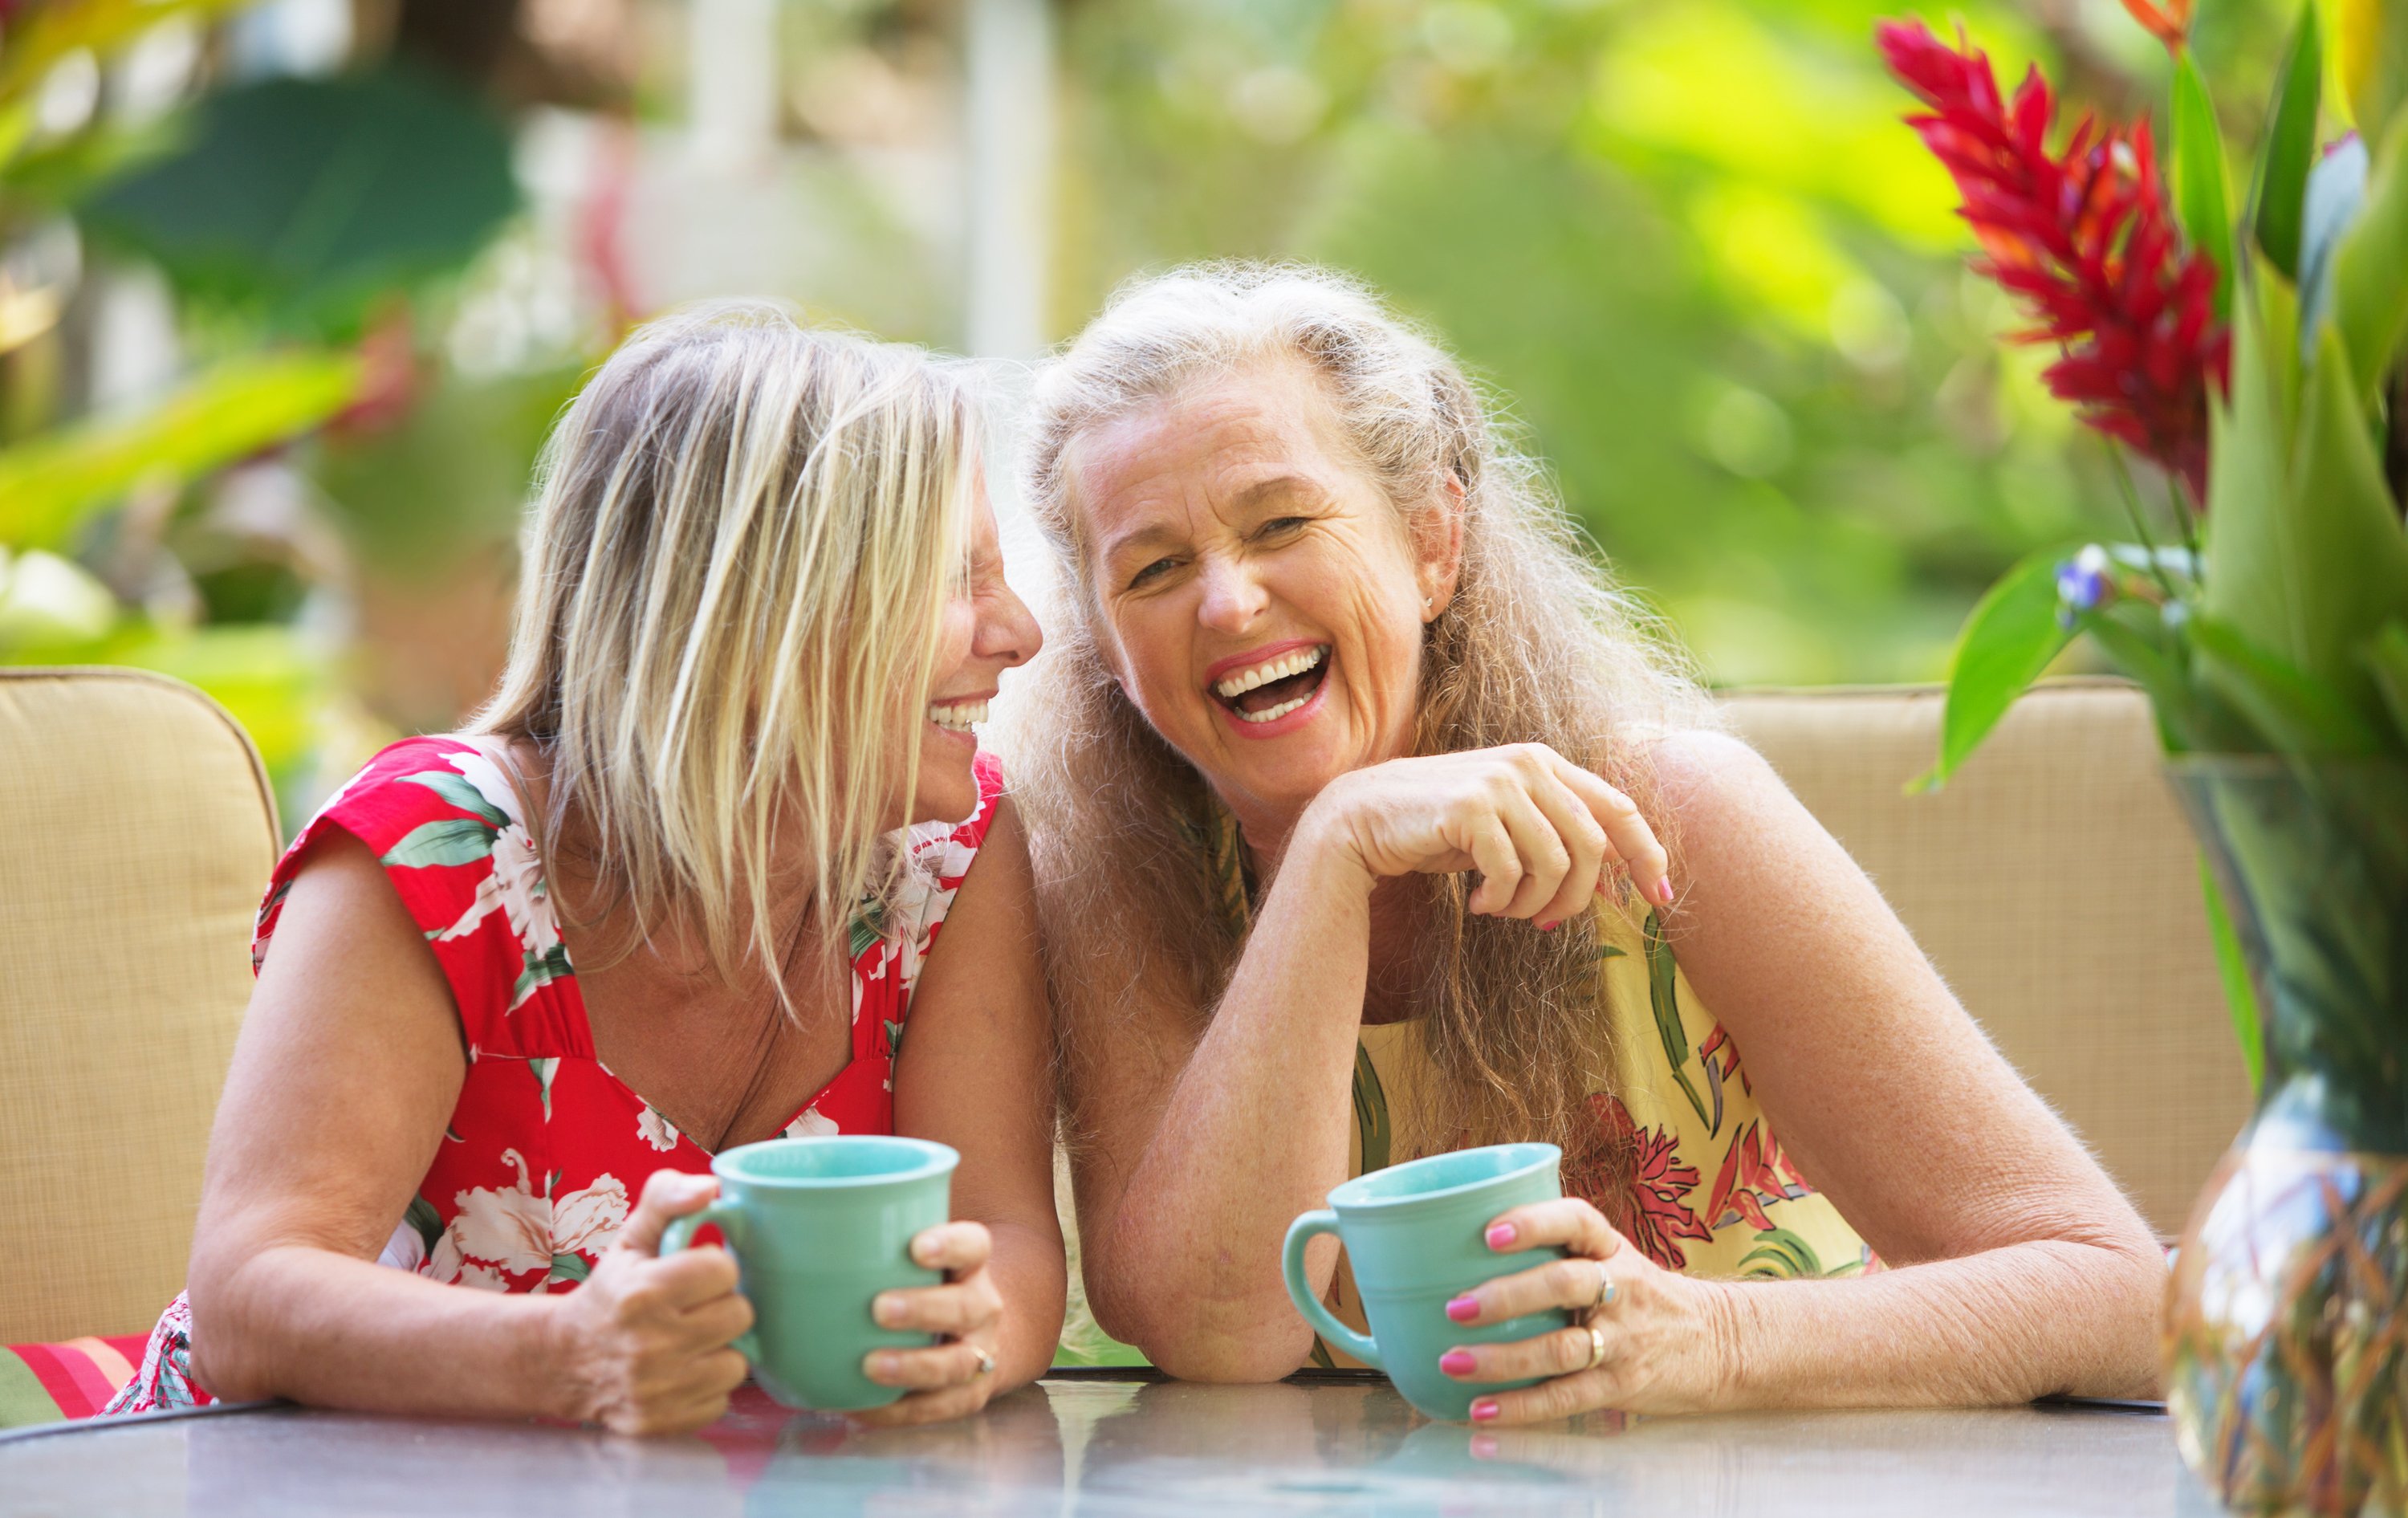 Zwei süße Freundinnen mittleren Alters lachen | Quelle: Shutterstock